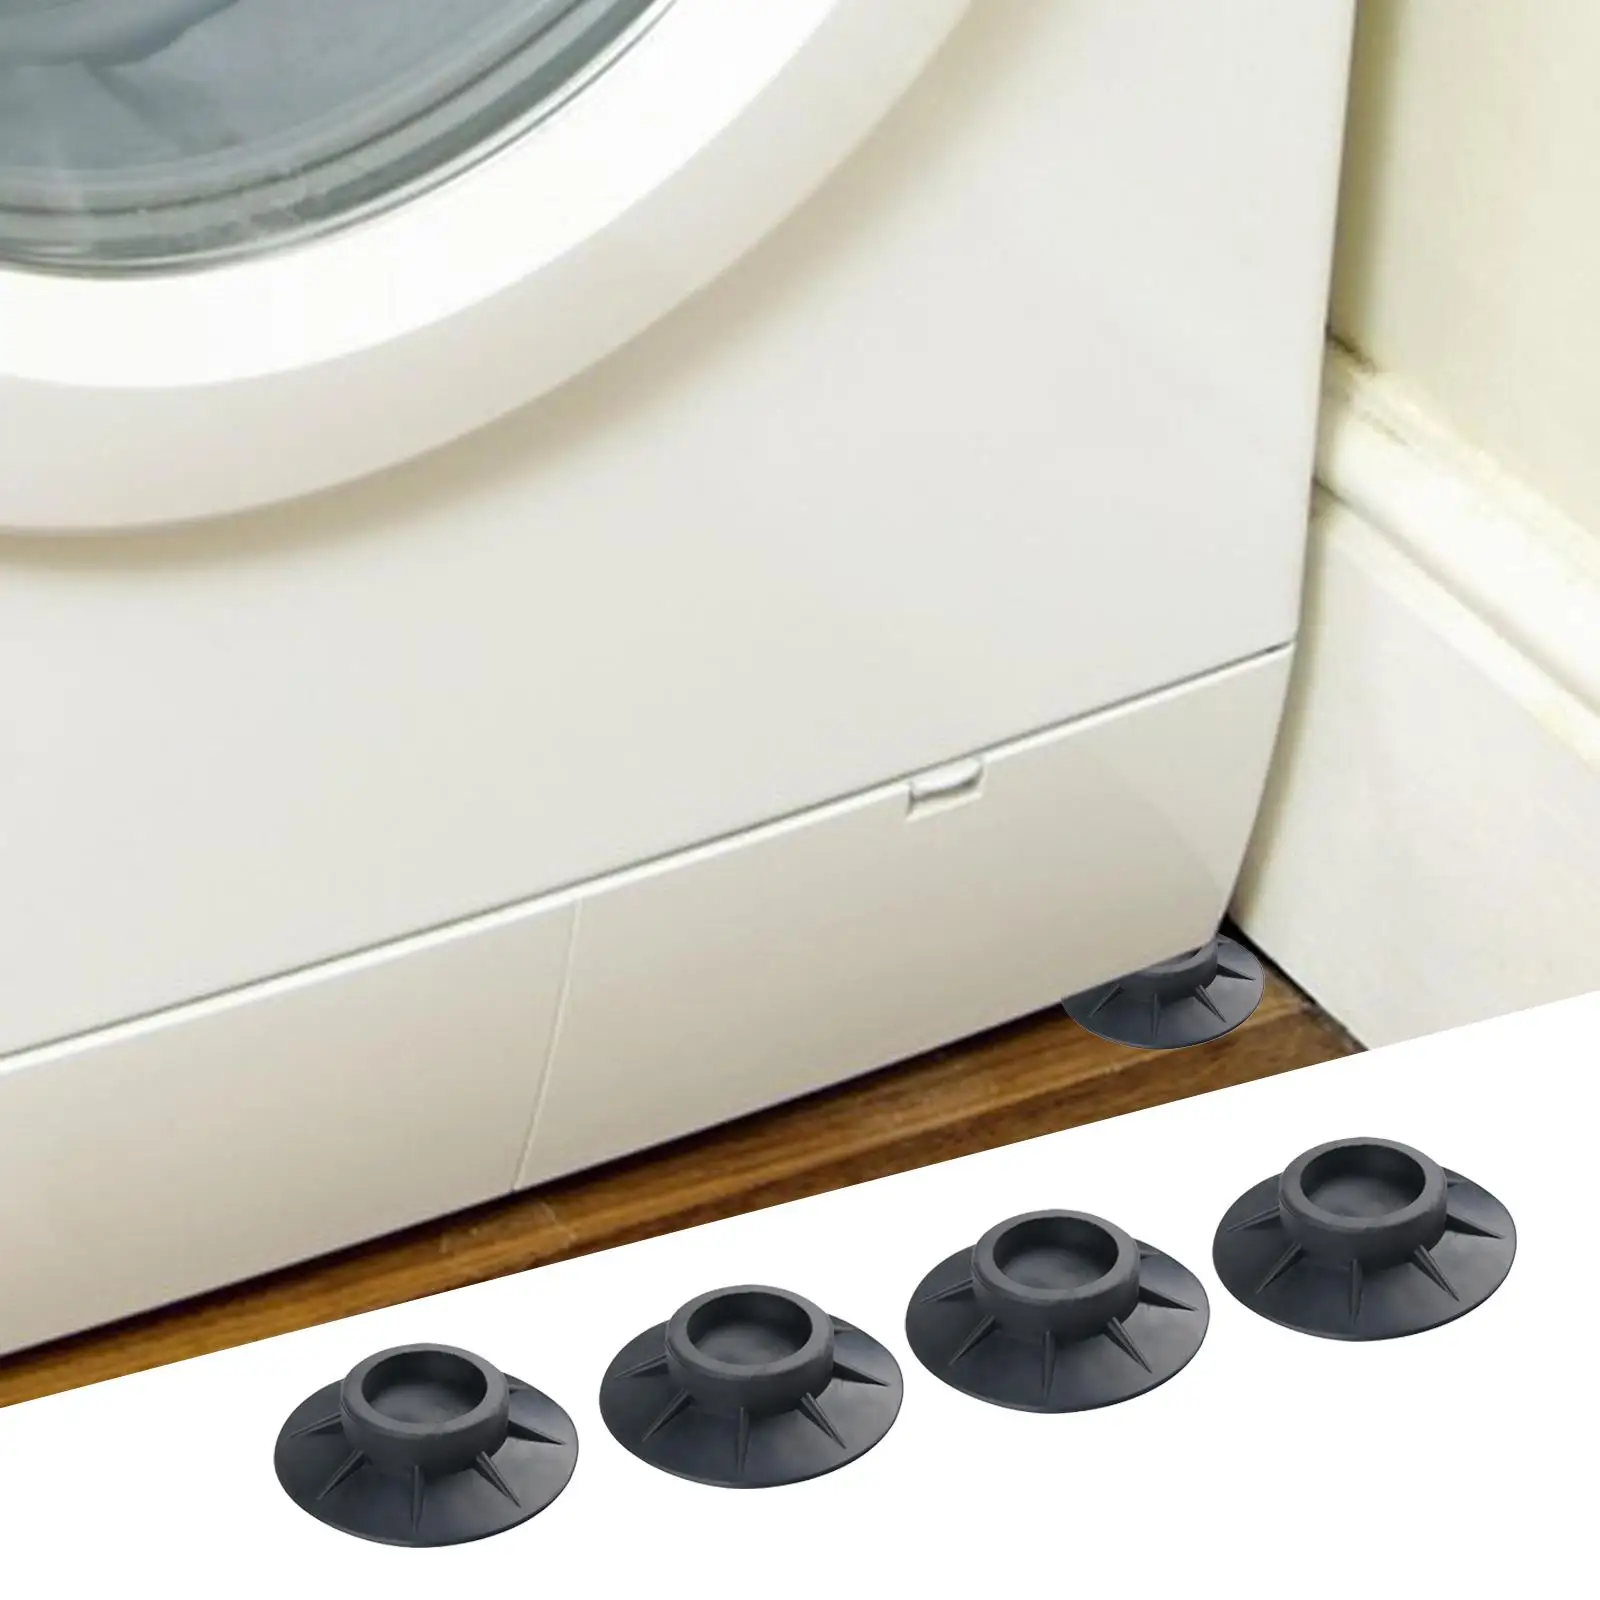 4Pcs Dryer Pedestals Covers Slip Rubber Slipstops Anitivibration Pad for Dishwashers